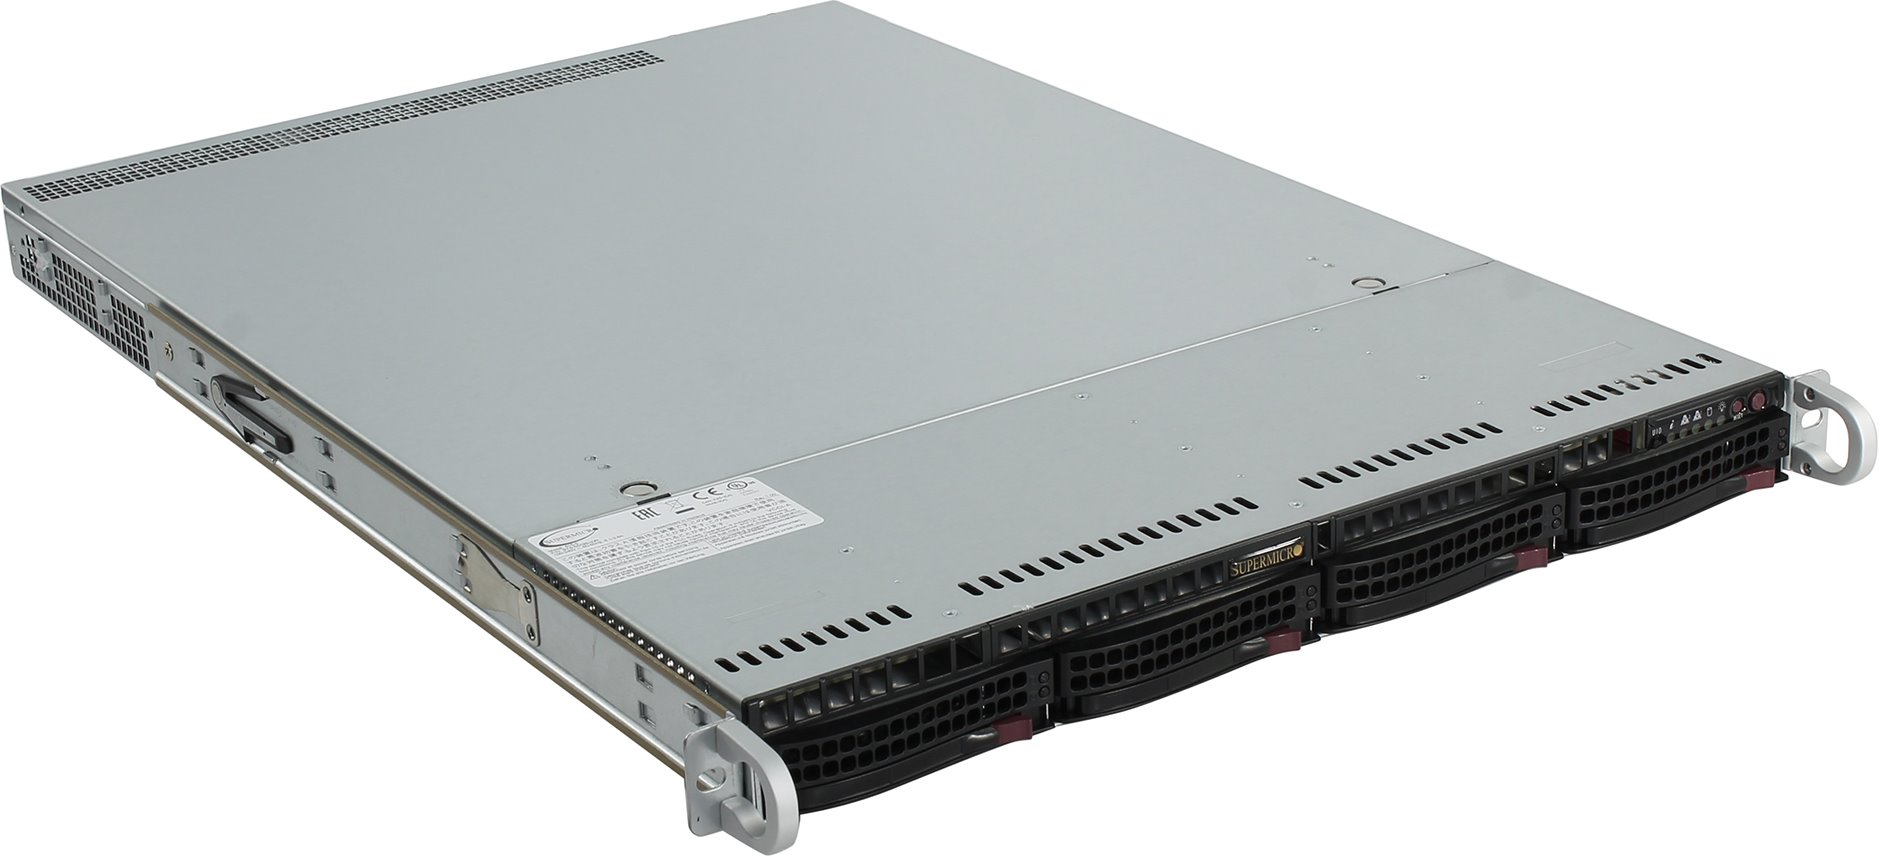 Платформа Supermicro SuperServer 1U 5019P-MTR noCPU(1)Scalable/TDP 70-205W/ no DIMM(8)/ SATARAID HDD(4)LFF/ 2x10GbE/ 1xFH, M2/ 2x400W